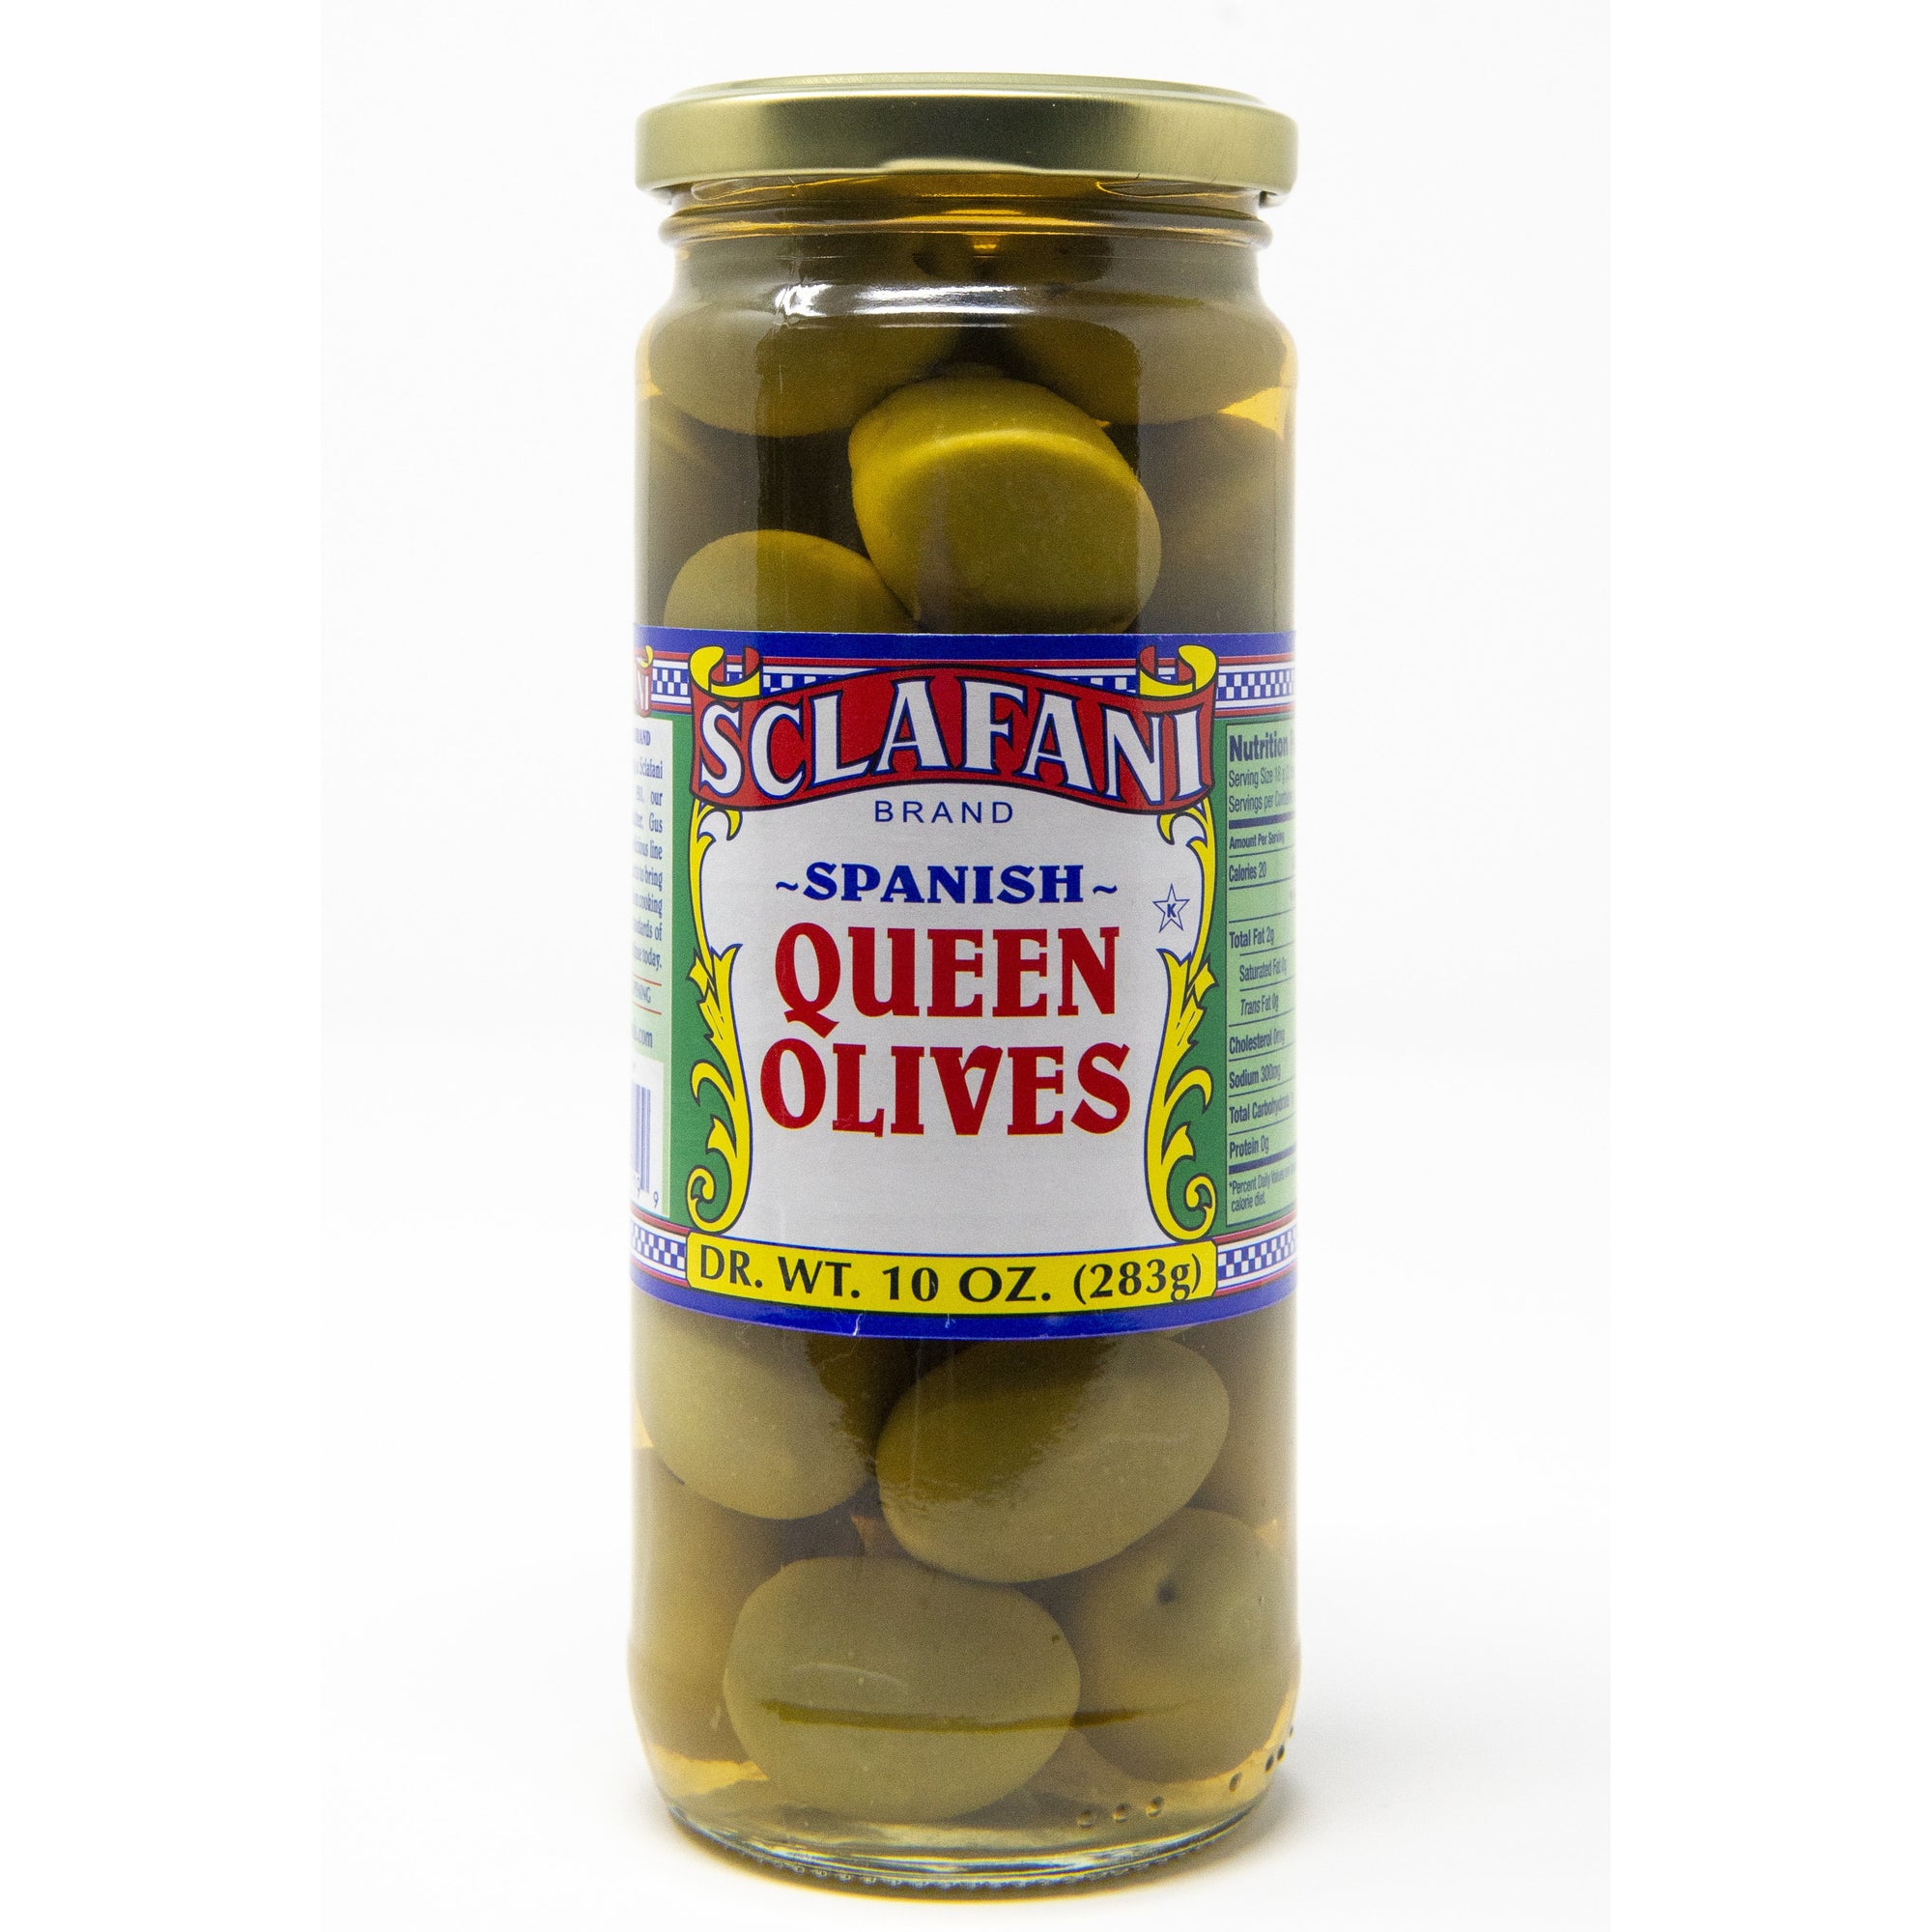 Sclafani Plain Queen Olives 10 oz.